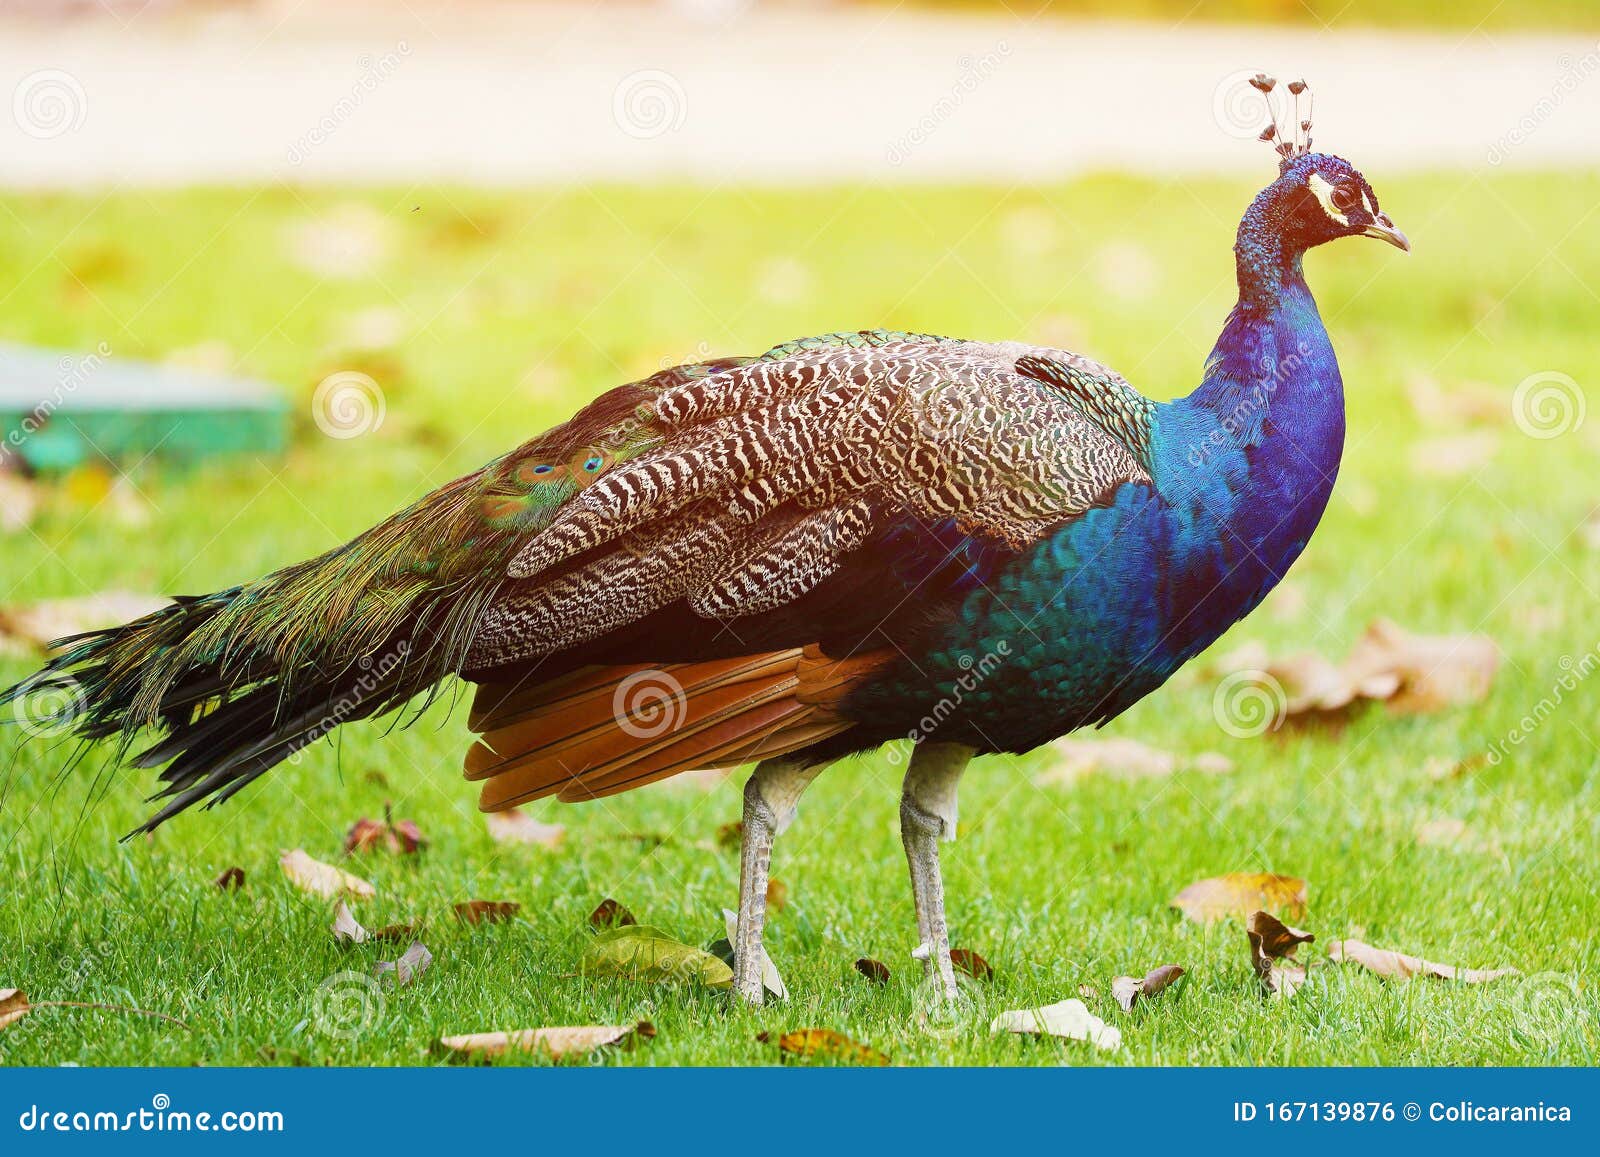 Turkey, Close-up View of Beautiful Bird Stock Photo - Image of ...